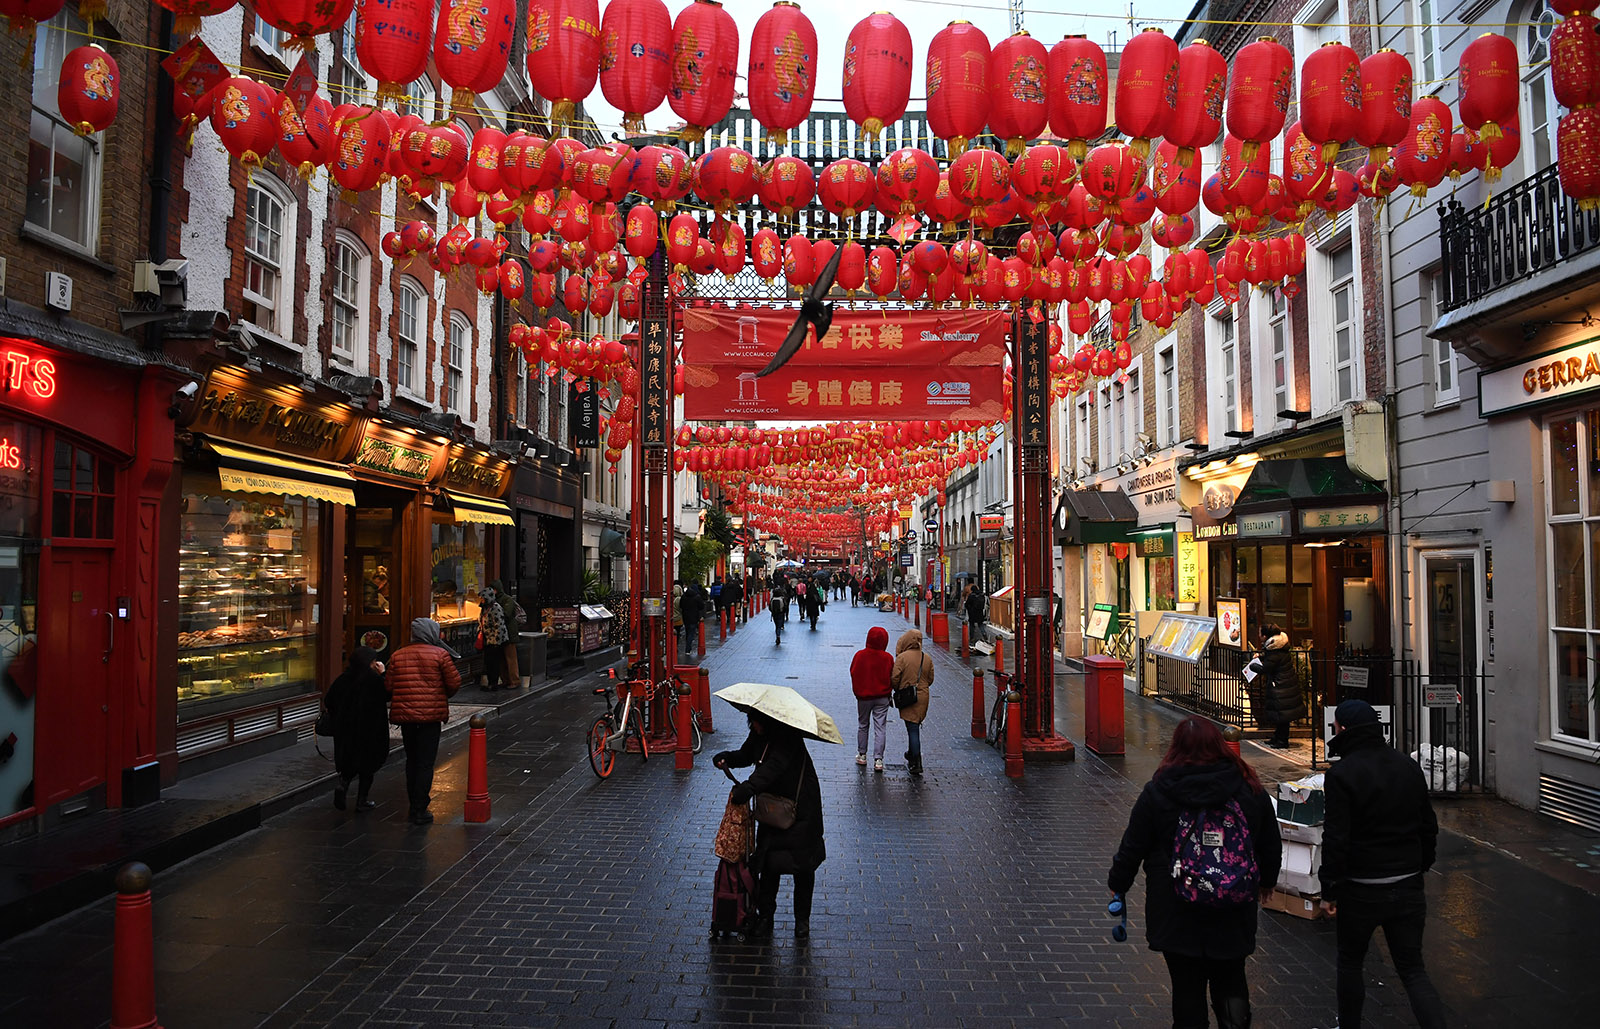 London's Chinatown